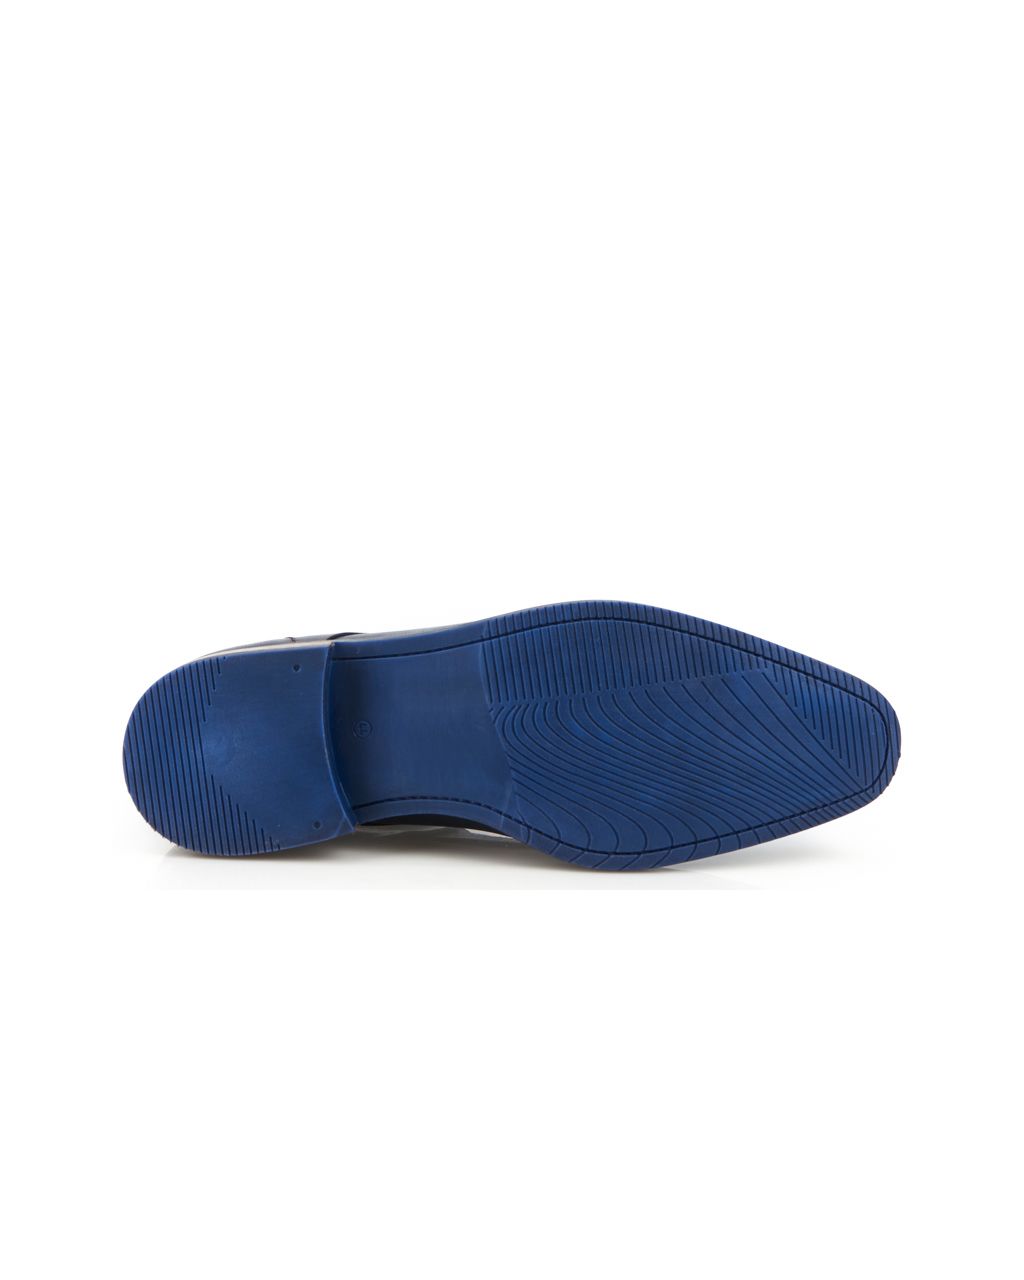 Recall Geklede schoenen Donkerblauw uni 074164-002-40